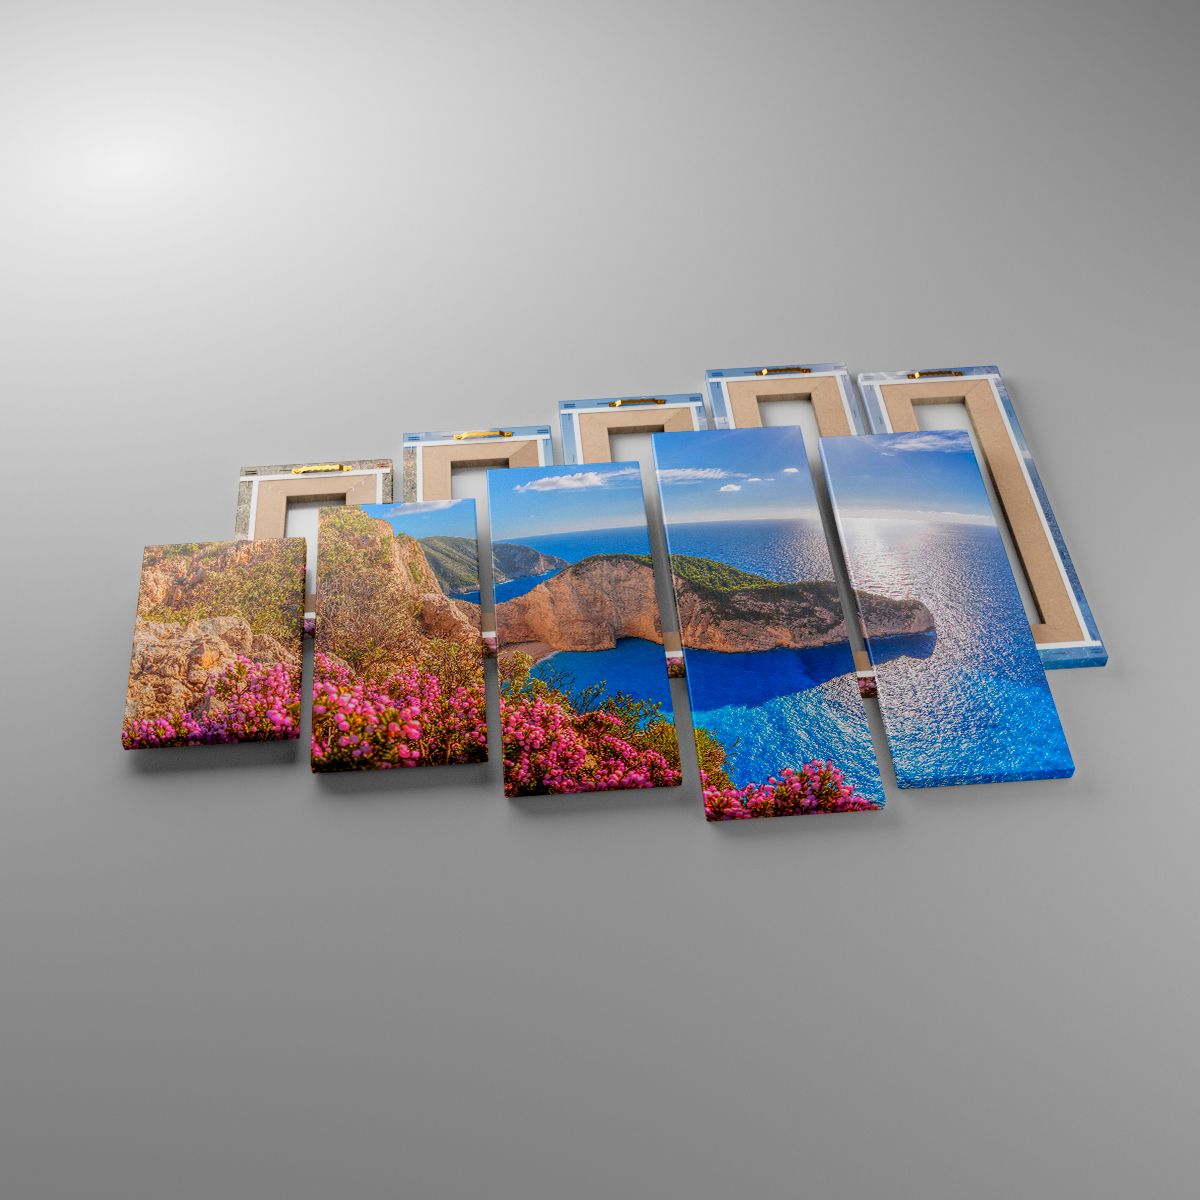 Leinwandbild Landschaft, Leinwandbild Meer, Leinwandbild Griechenland, Leinwandbild Blumen, Leinwandbild Reisen